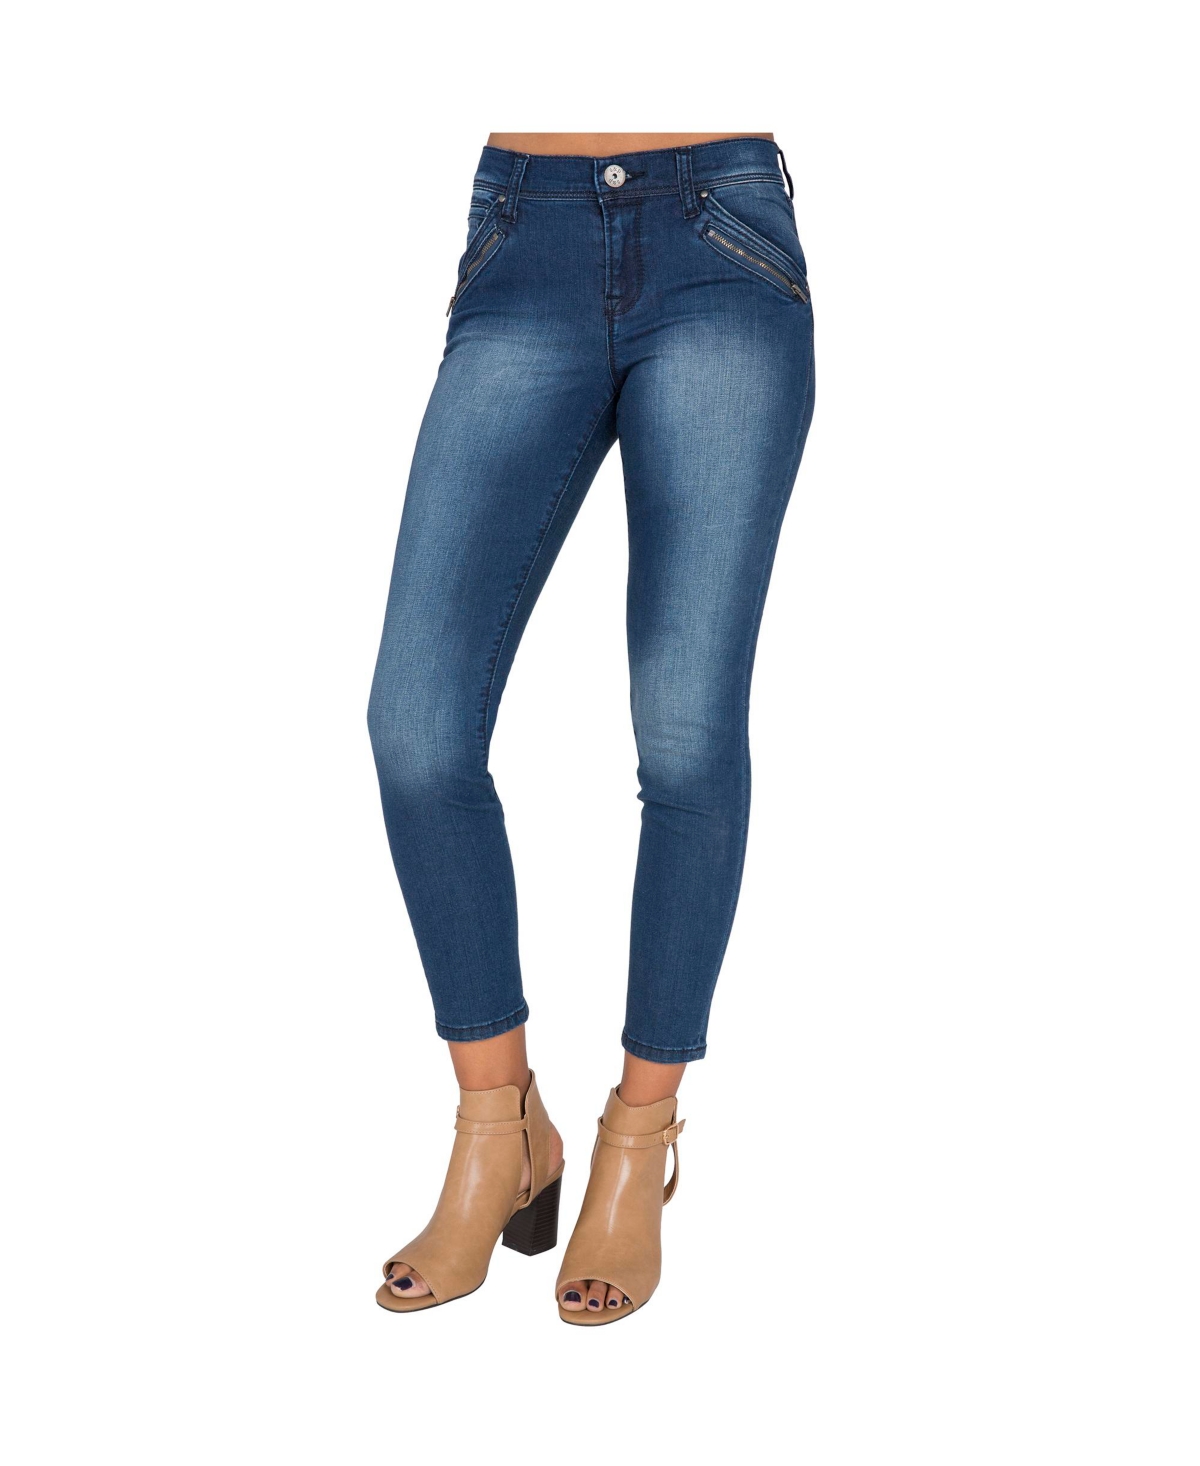 Women's Zipper Pocket Ankle Jeans - Medium blue